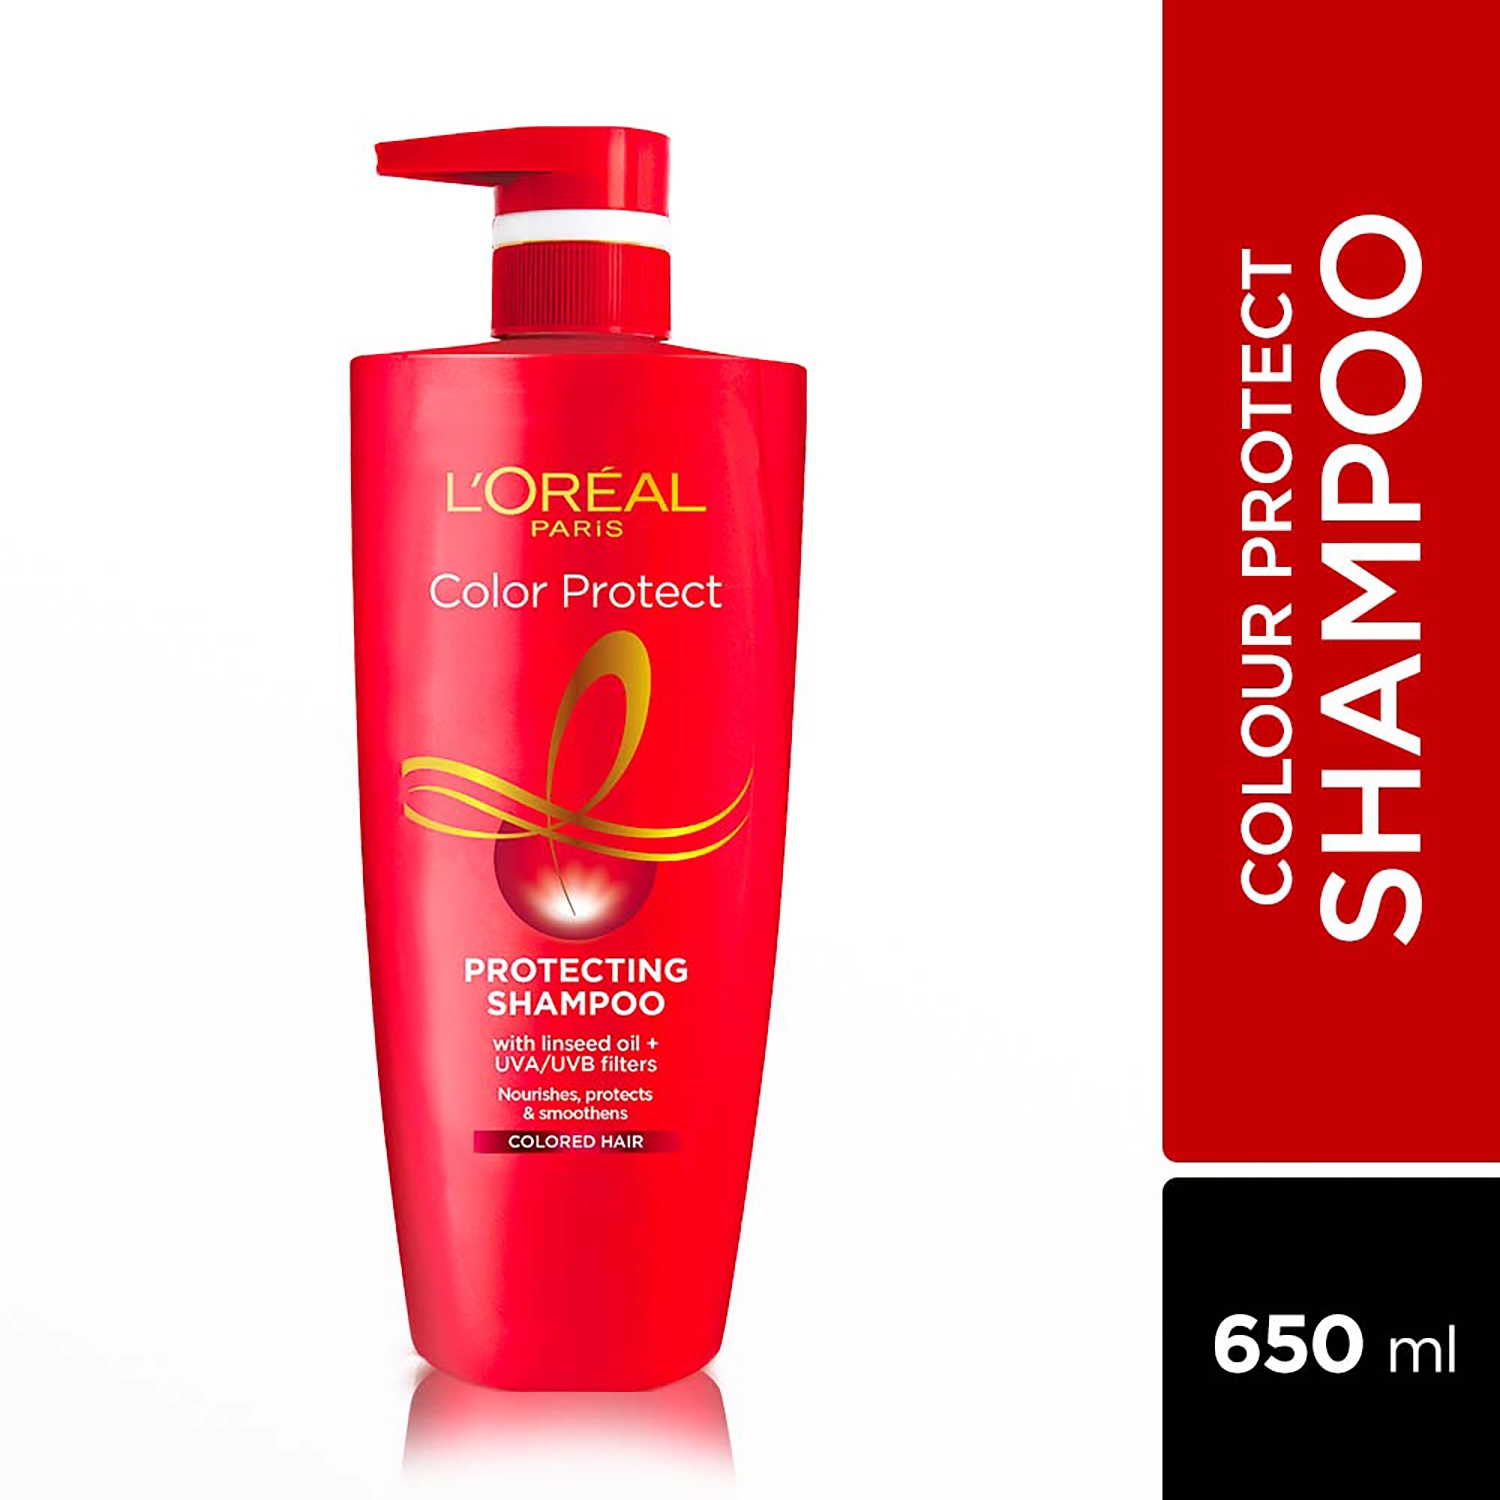 L'Oreal Paris | L'Oreal Paris Color Protect Shampoo, 650 ml